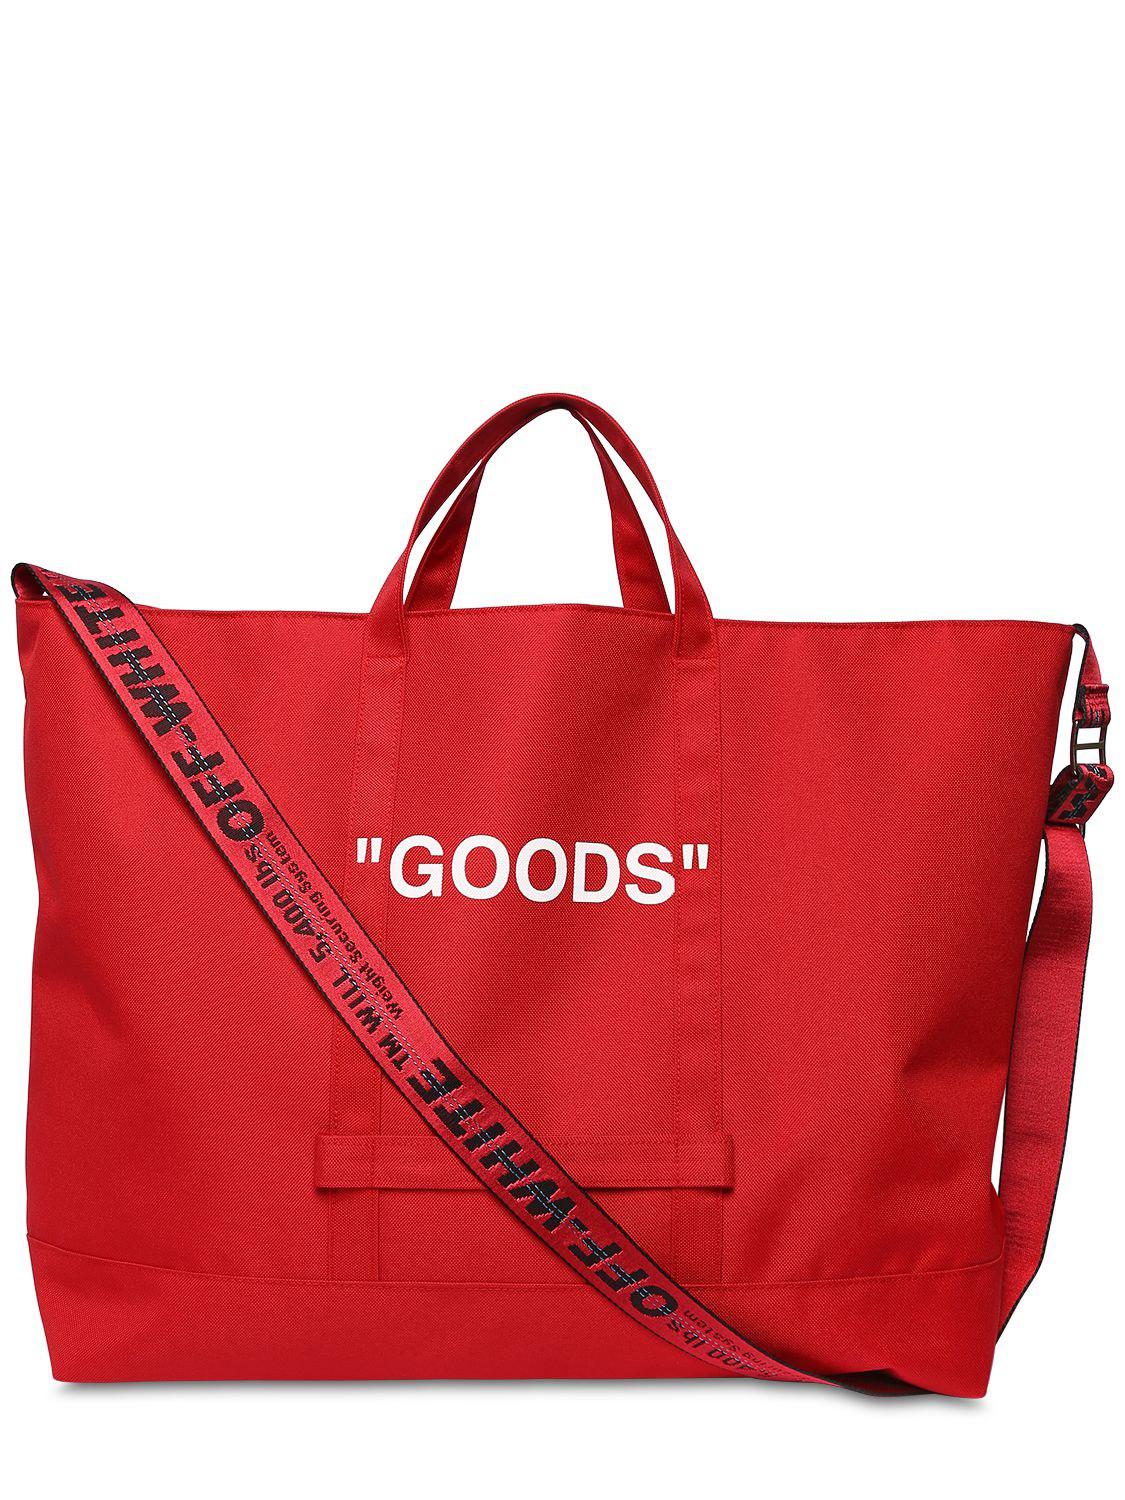 Off-White c/o Virgil Abloh goods Nylon Tote Bag in Red